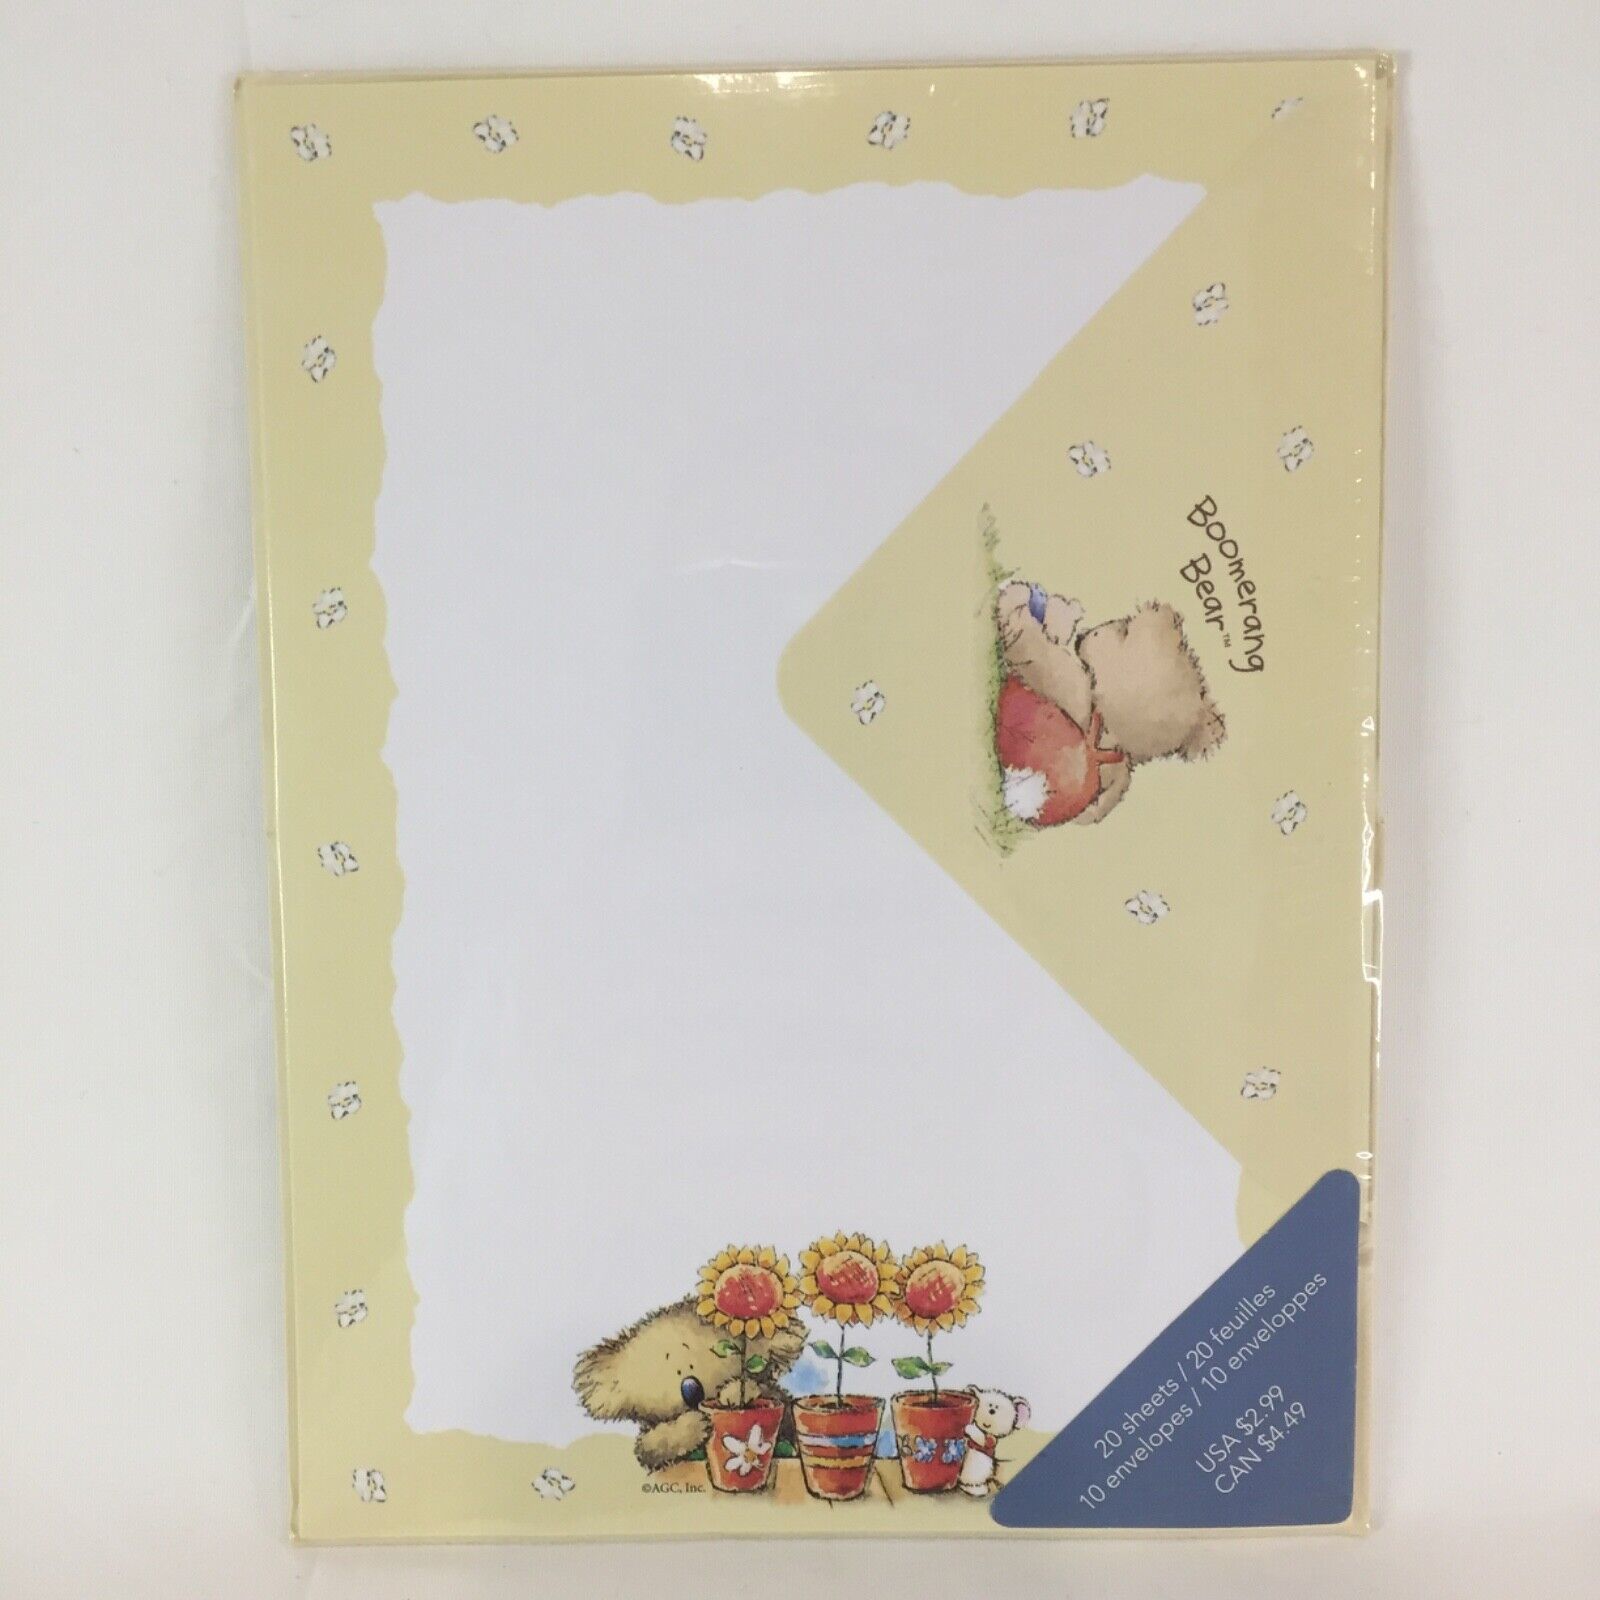 New Boomerang Bear American Greeting Letter Stationery Set Koala 1980s Paper - $20.77